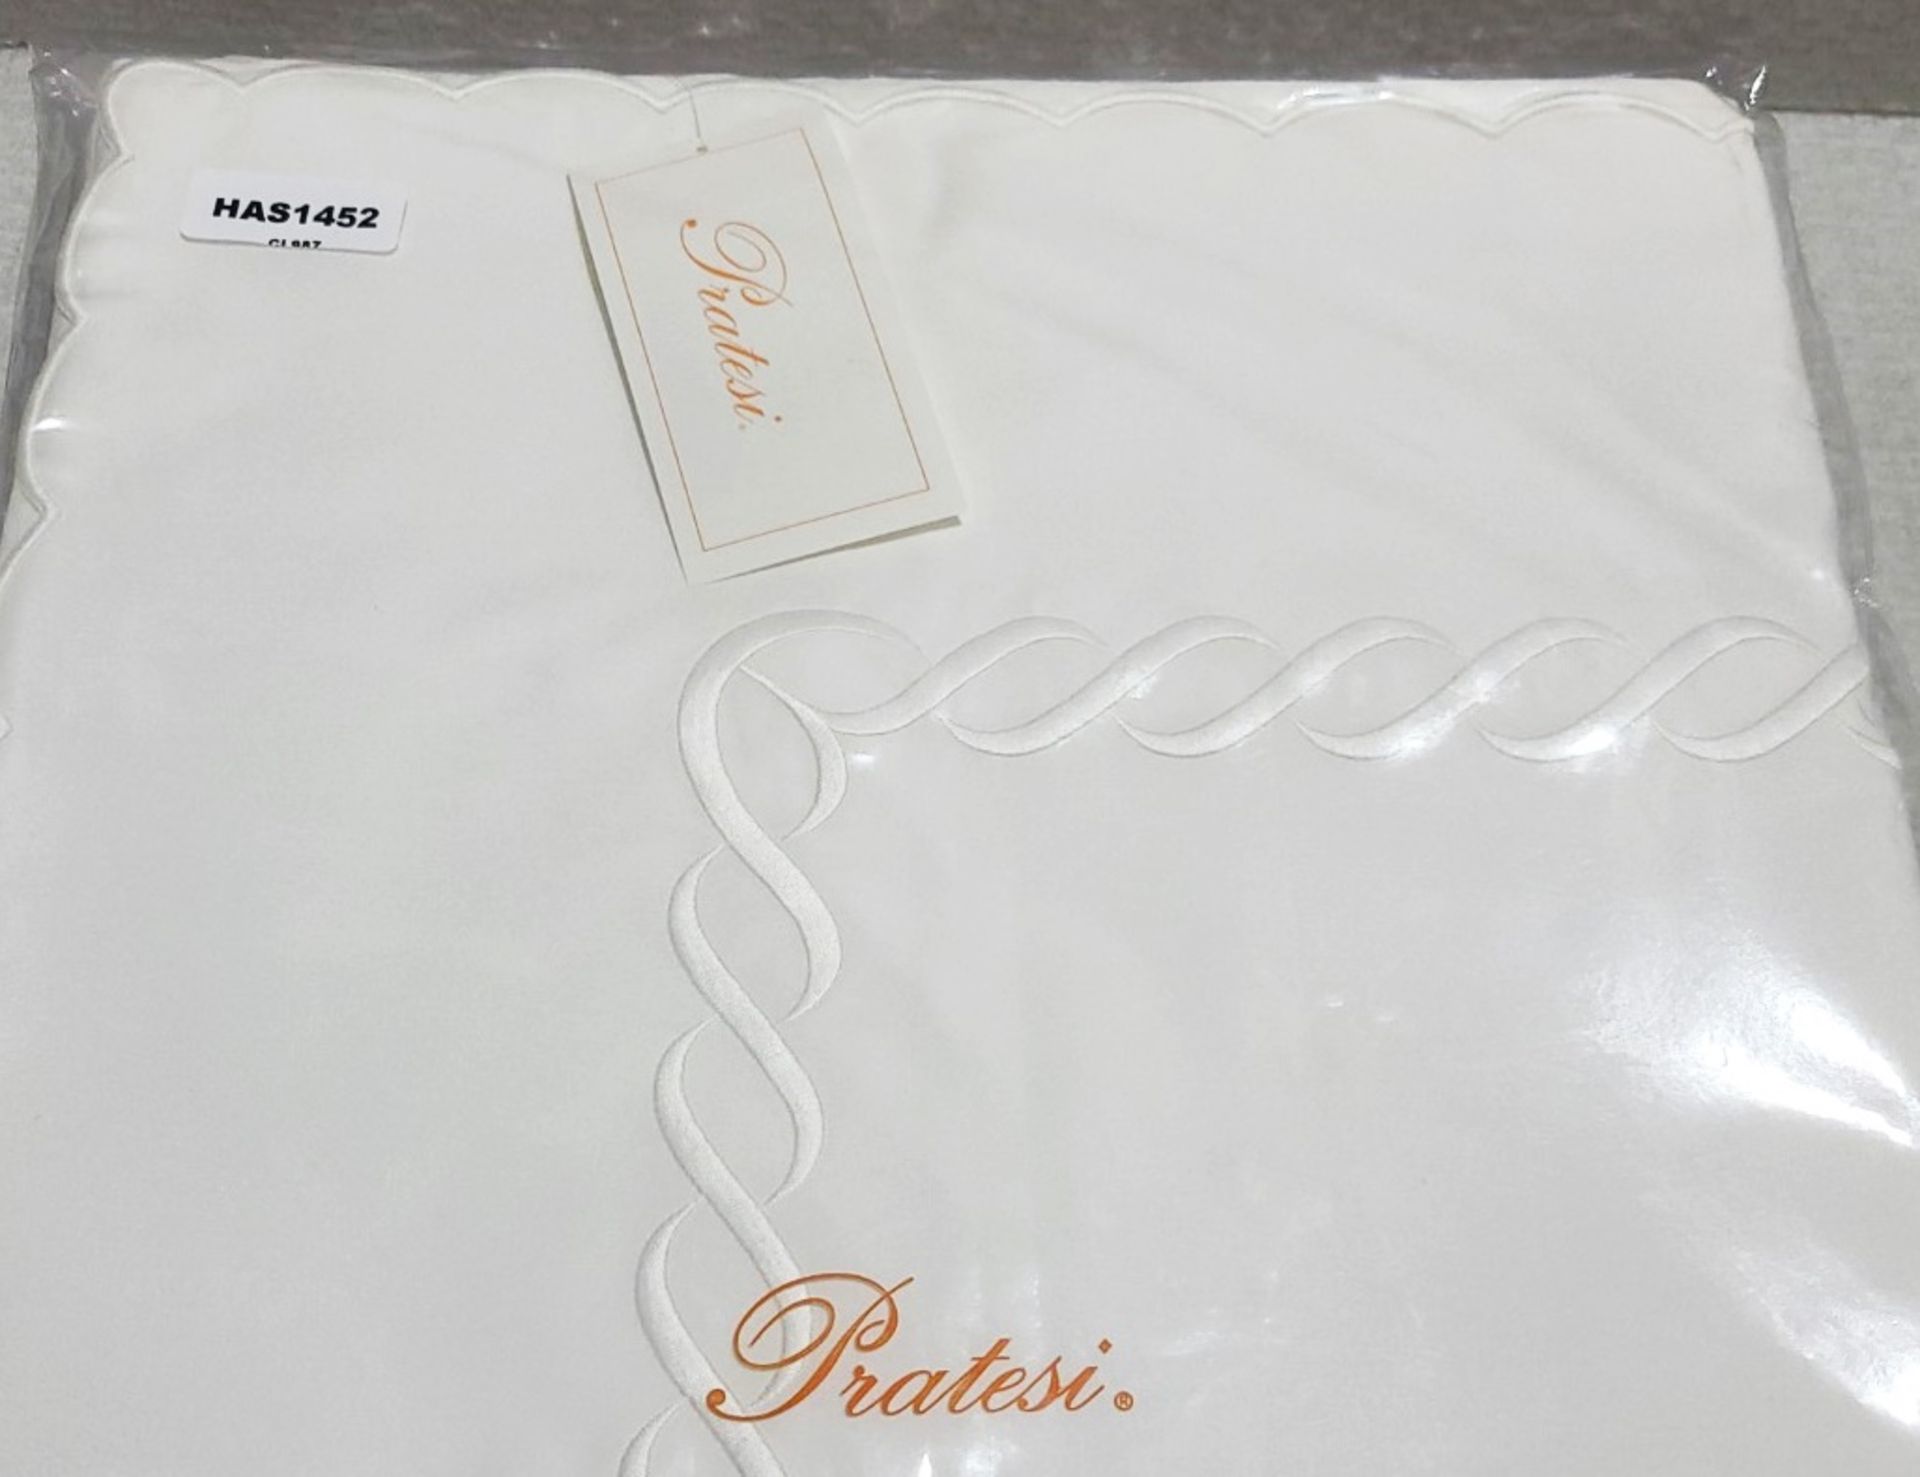 1 x PRATESI Treccia White Forever Embroidered Angel Skin Top Sheet 305x270cm - Image 2 of 5